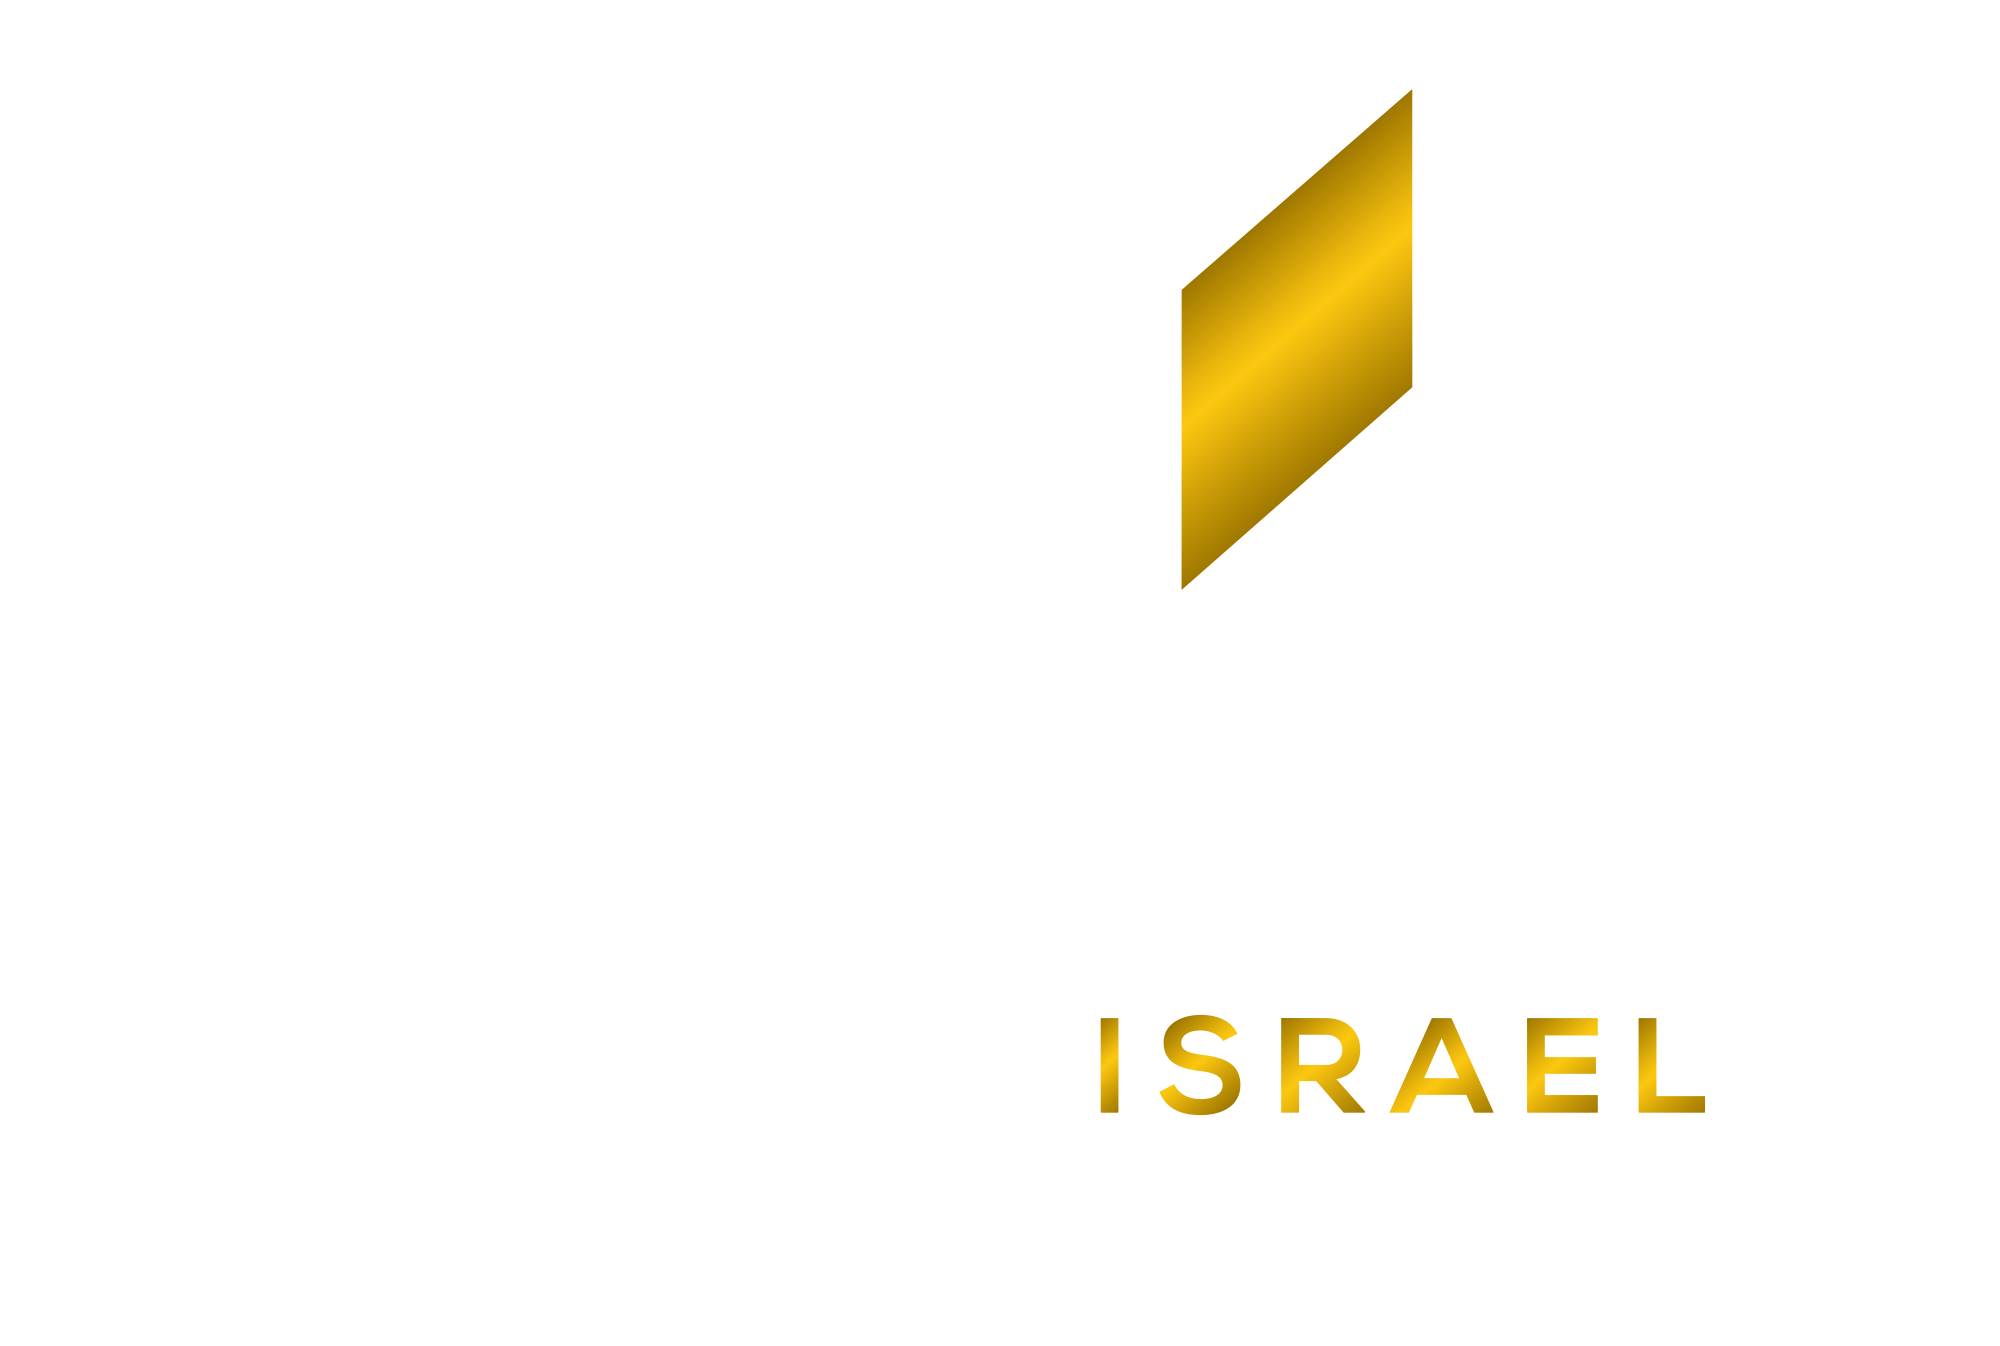 Georgia-Israel Group